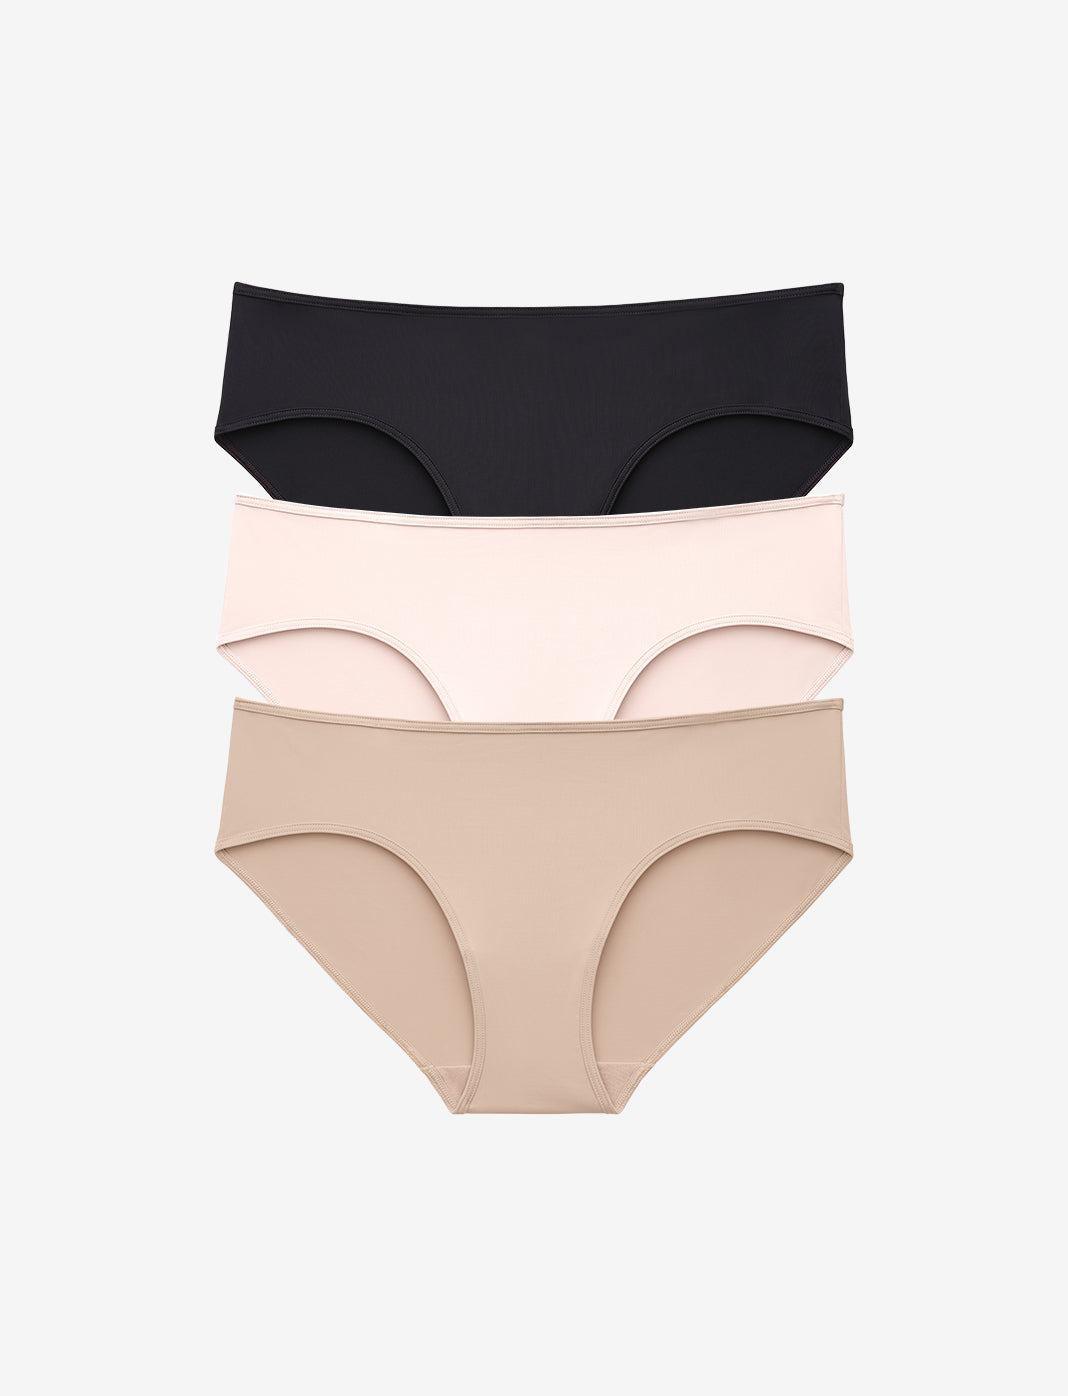 Best Workout Underwear for Women - Schimiggy Reviews